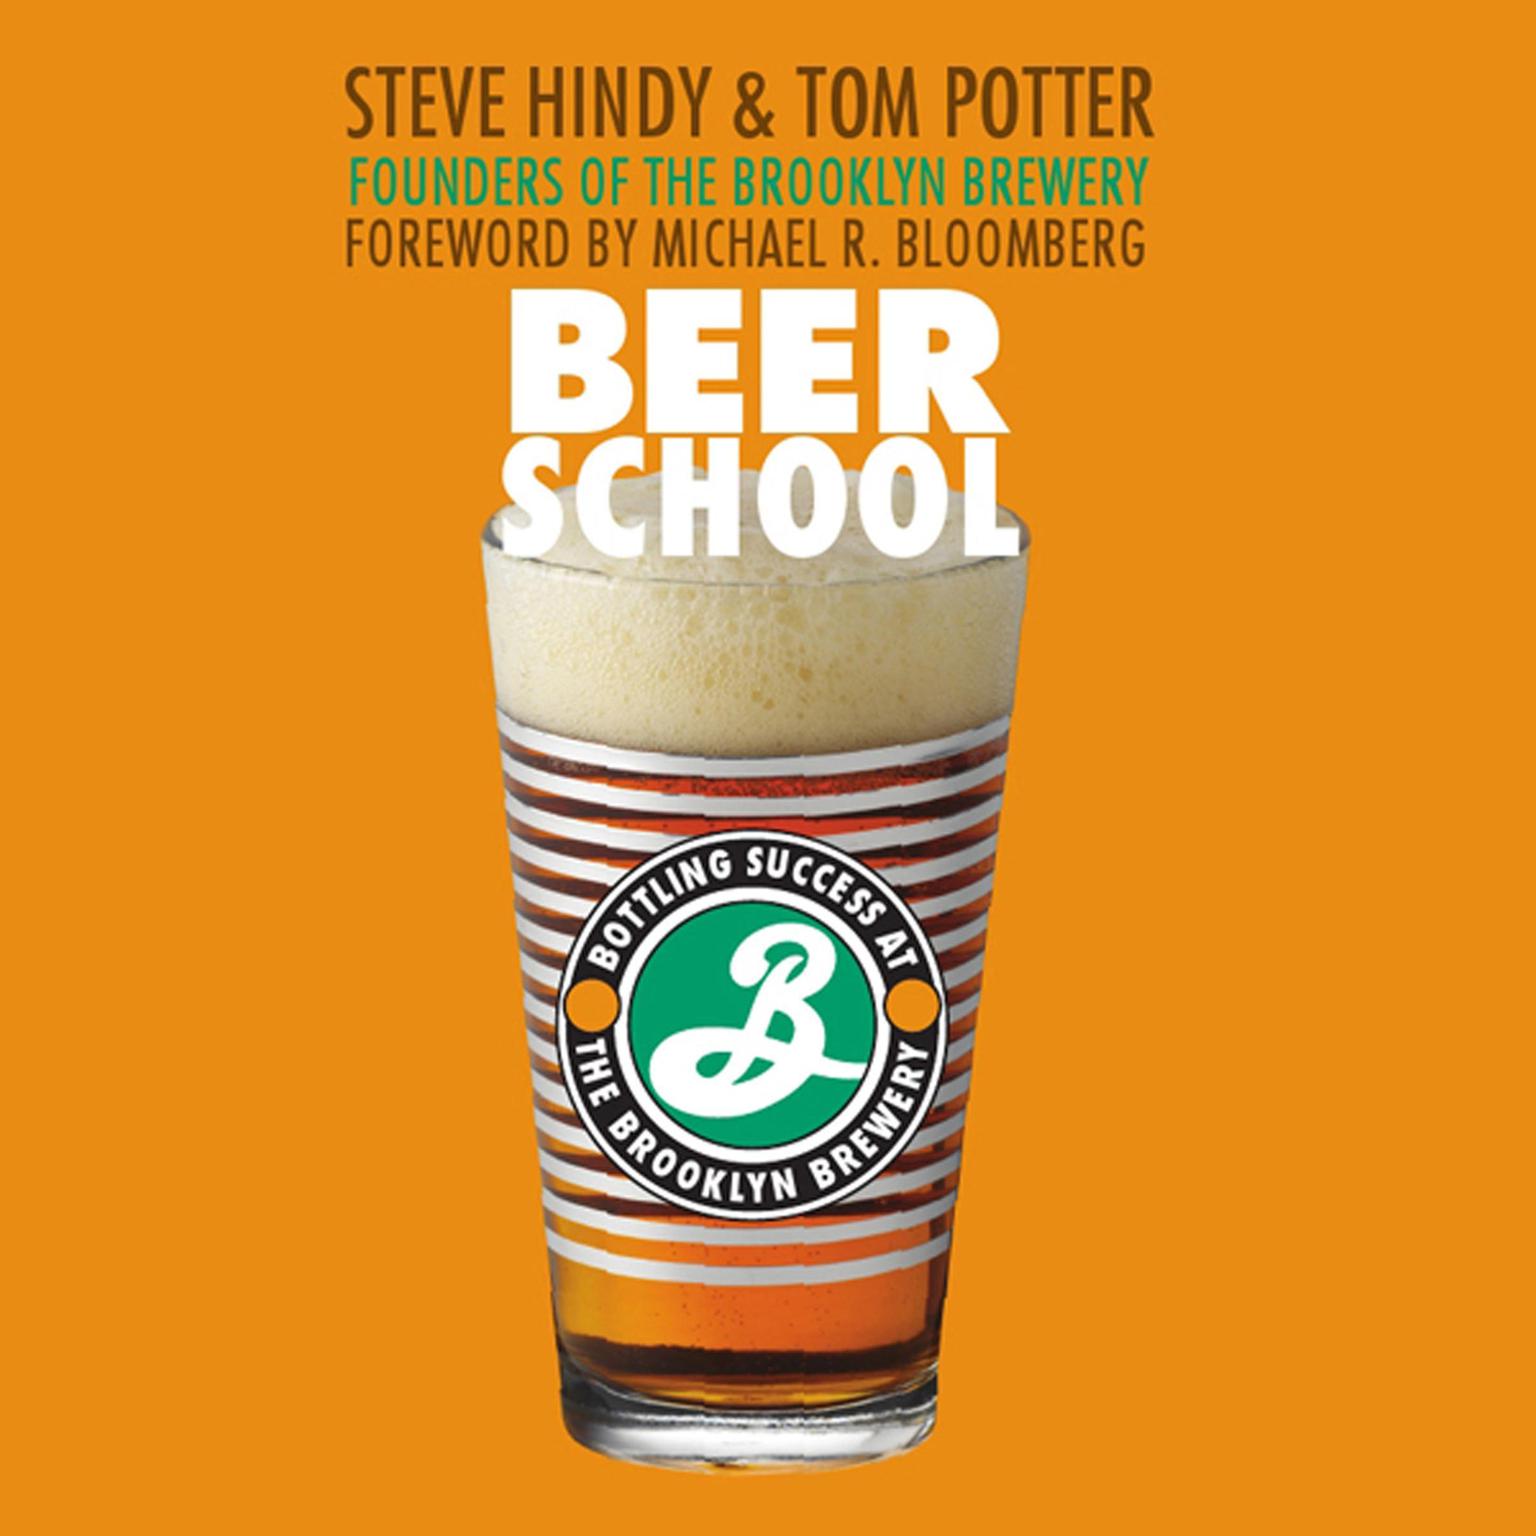 Beer School: Bottling Success at the Brooklyn Brewery Audiobook, by Steve Hindy